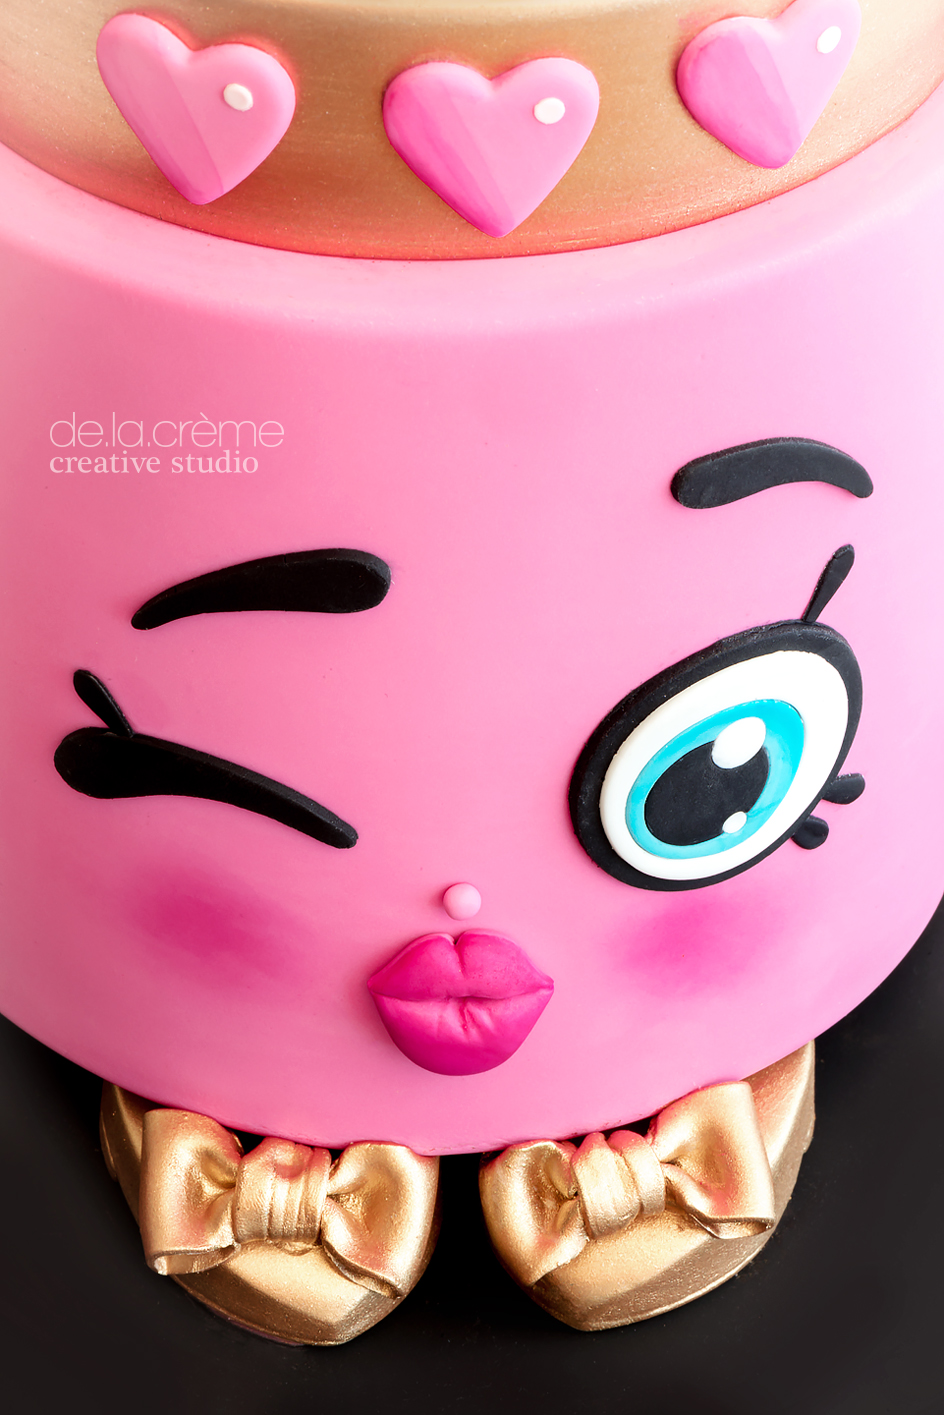 Shopkins Lipstick Cake De Crème Creative Studio